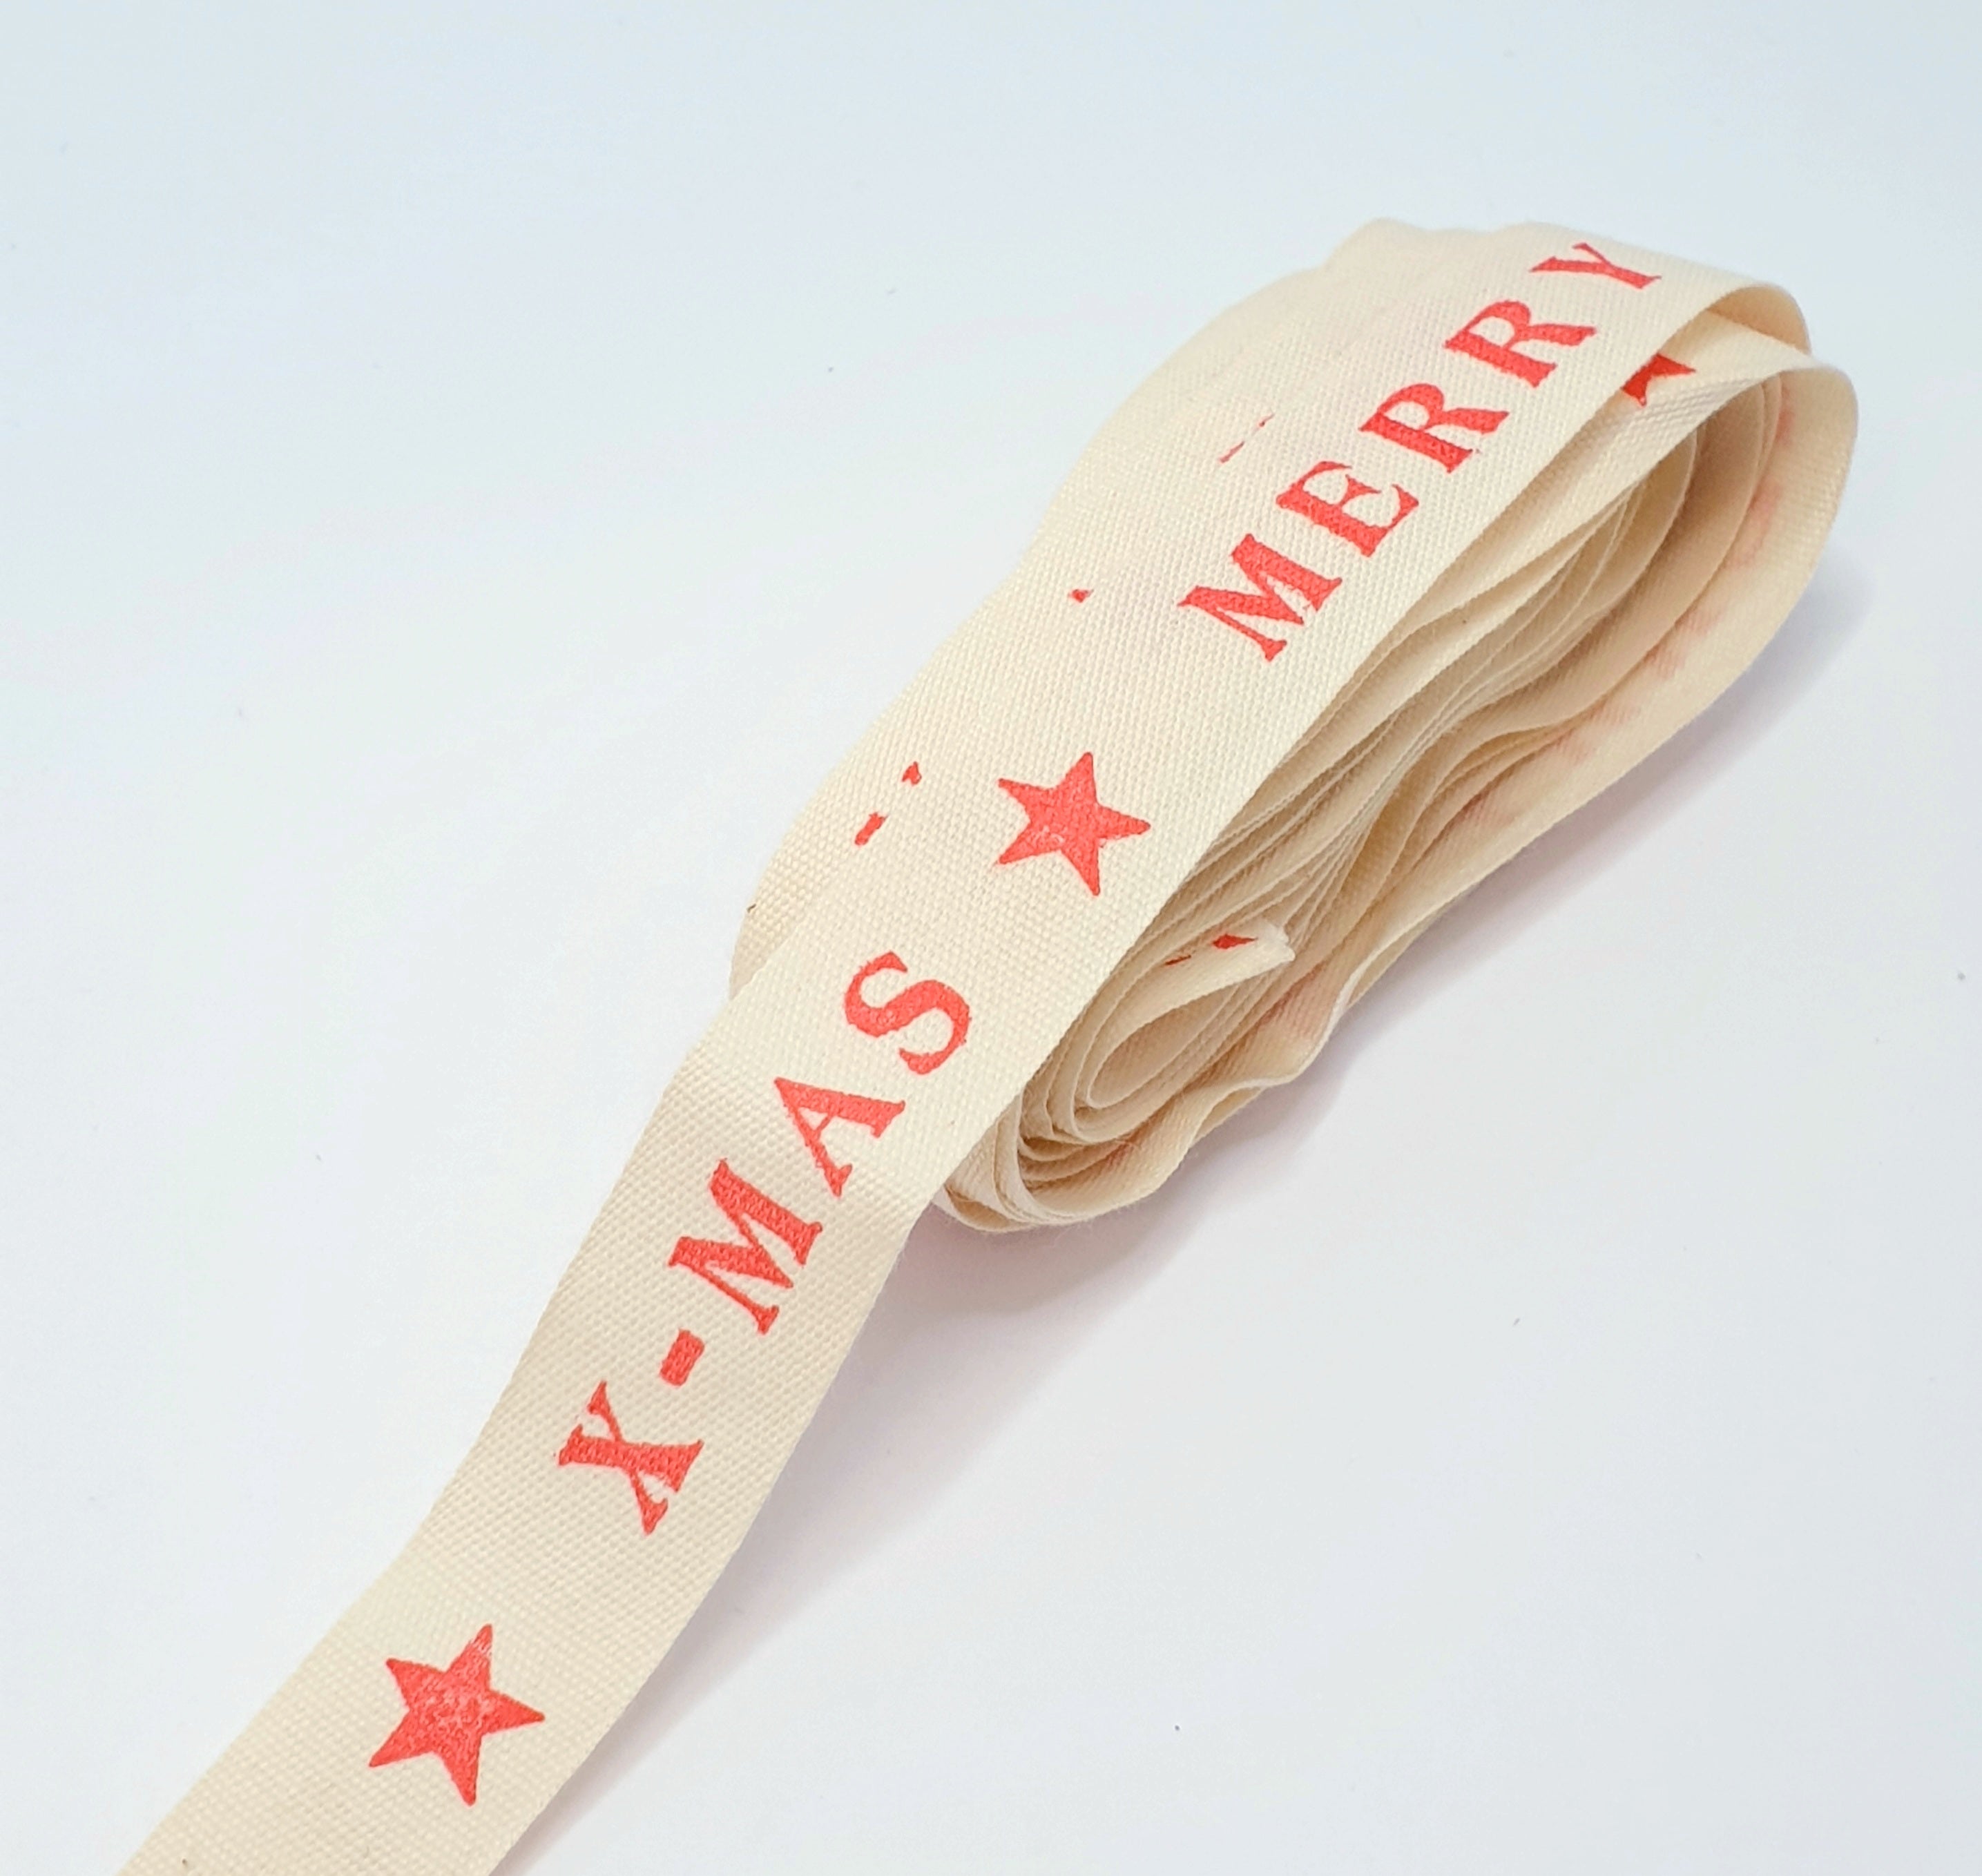 MajorCrafts 4.5m 5yds - 15mm wide 'Merry Xmas' Printed Cotton Fabric Ribbon